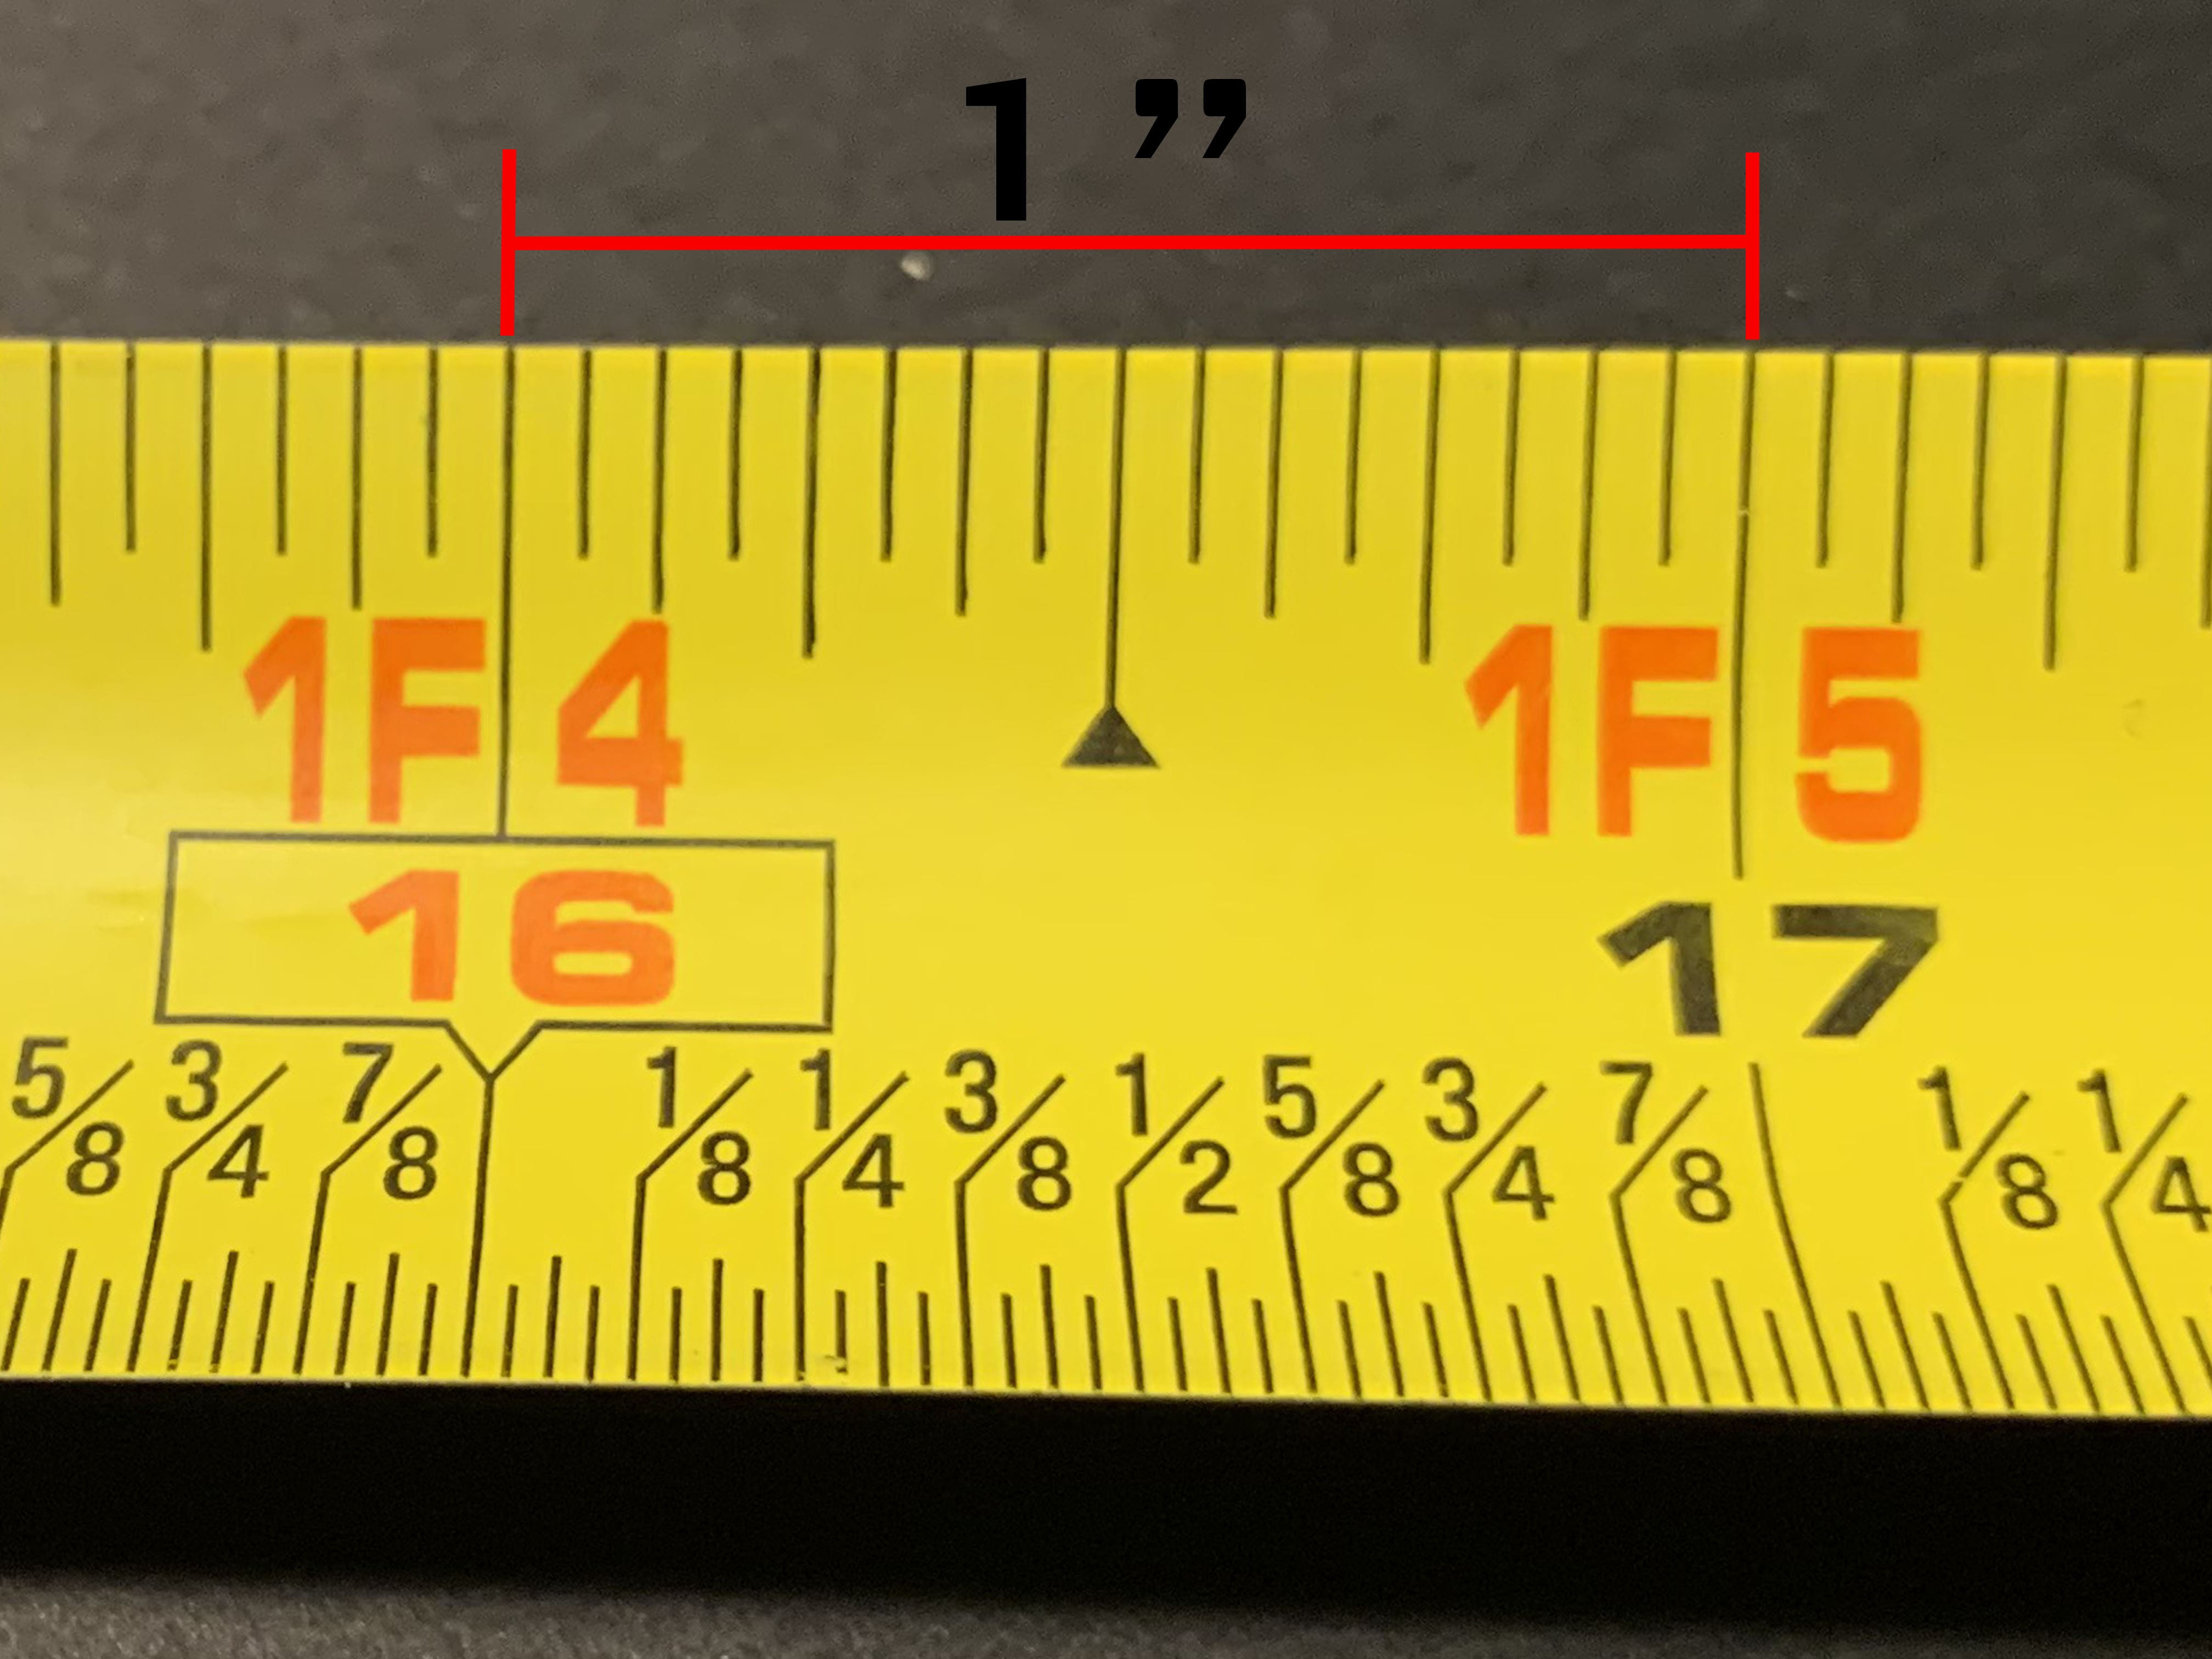 dummy tape measure reading